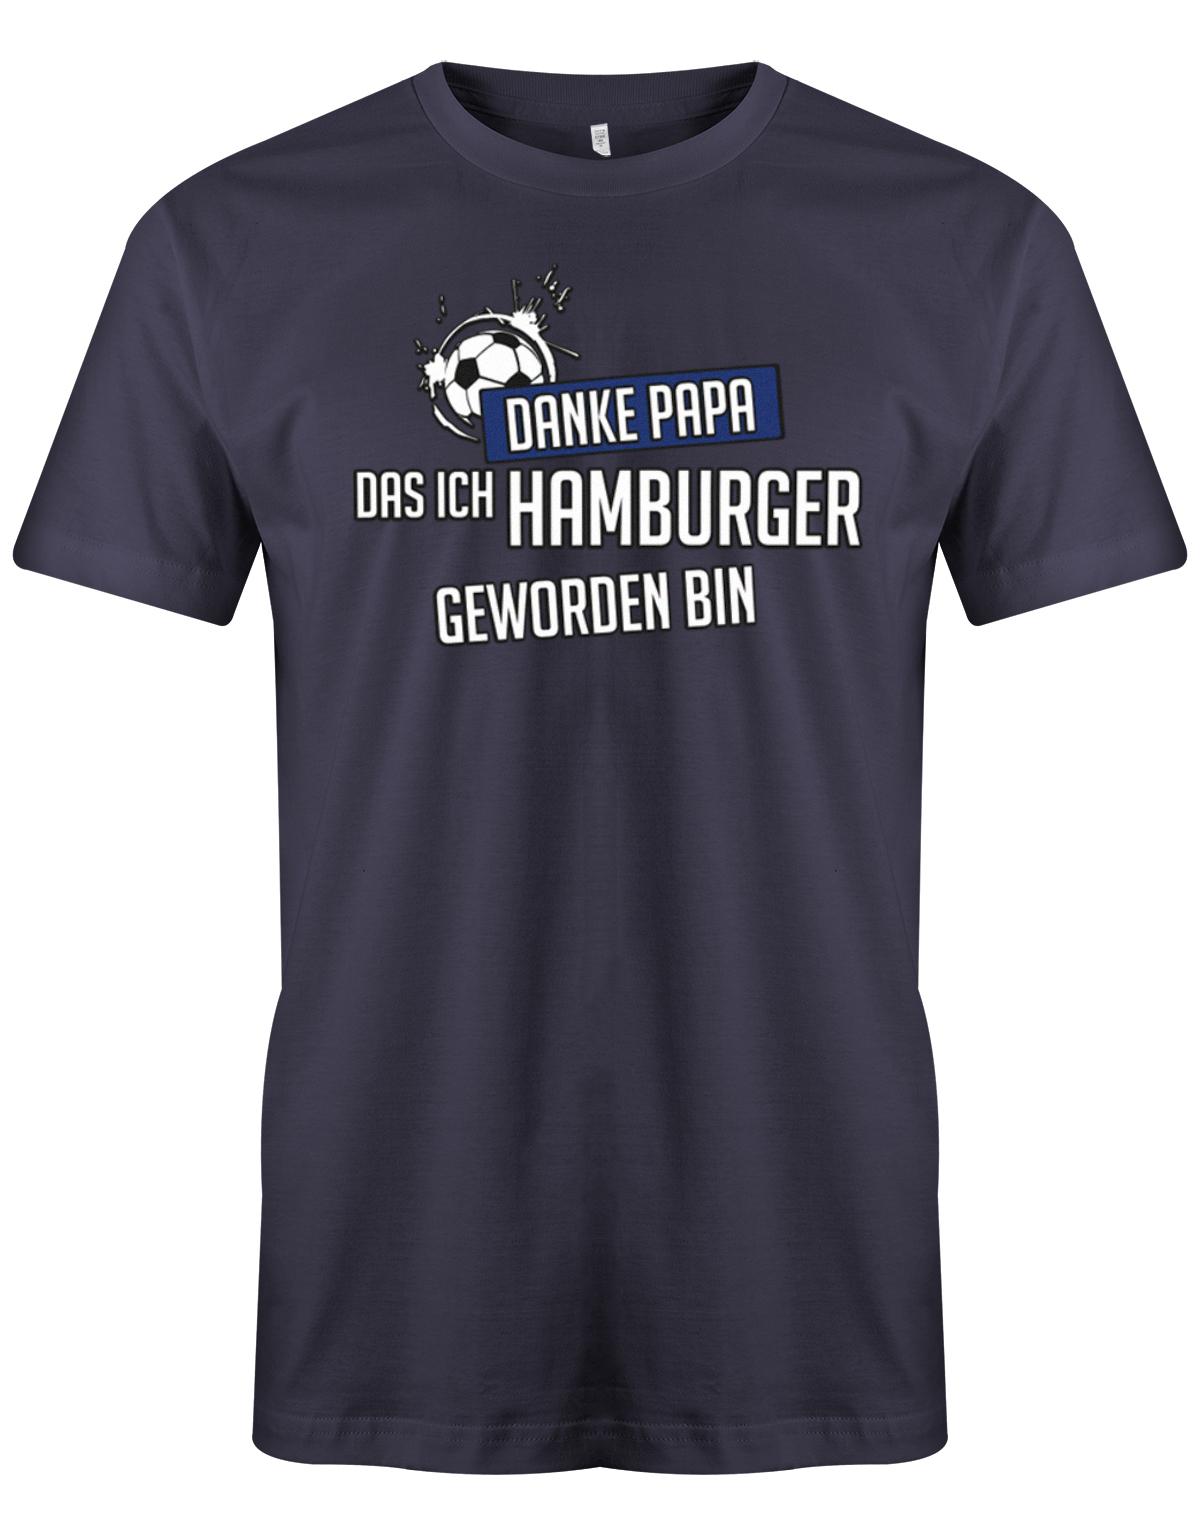 Danke-papa-das-ich-Hamburger-geworden-Hamburg-shirt-herren-Navy